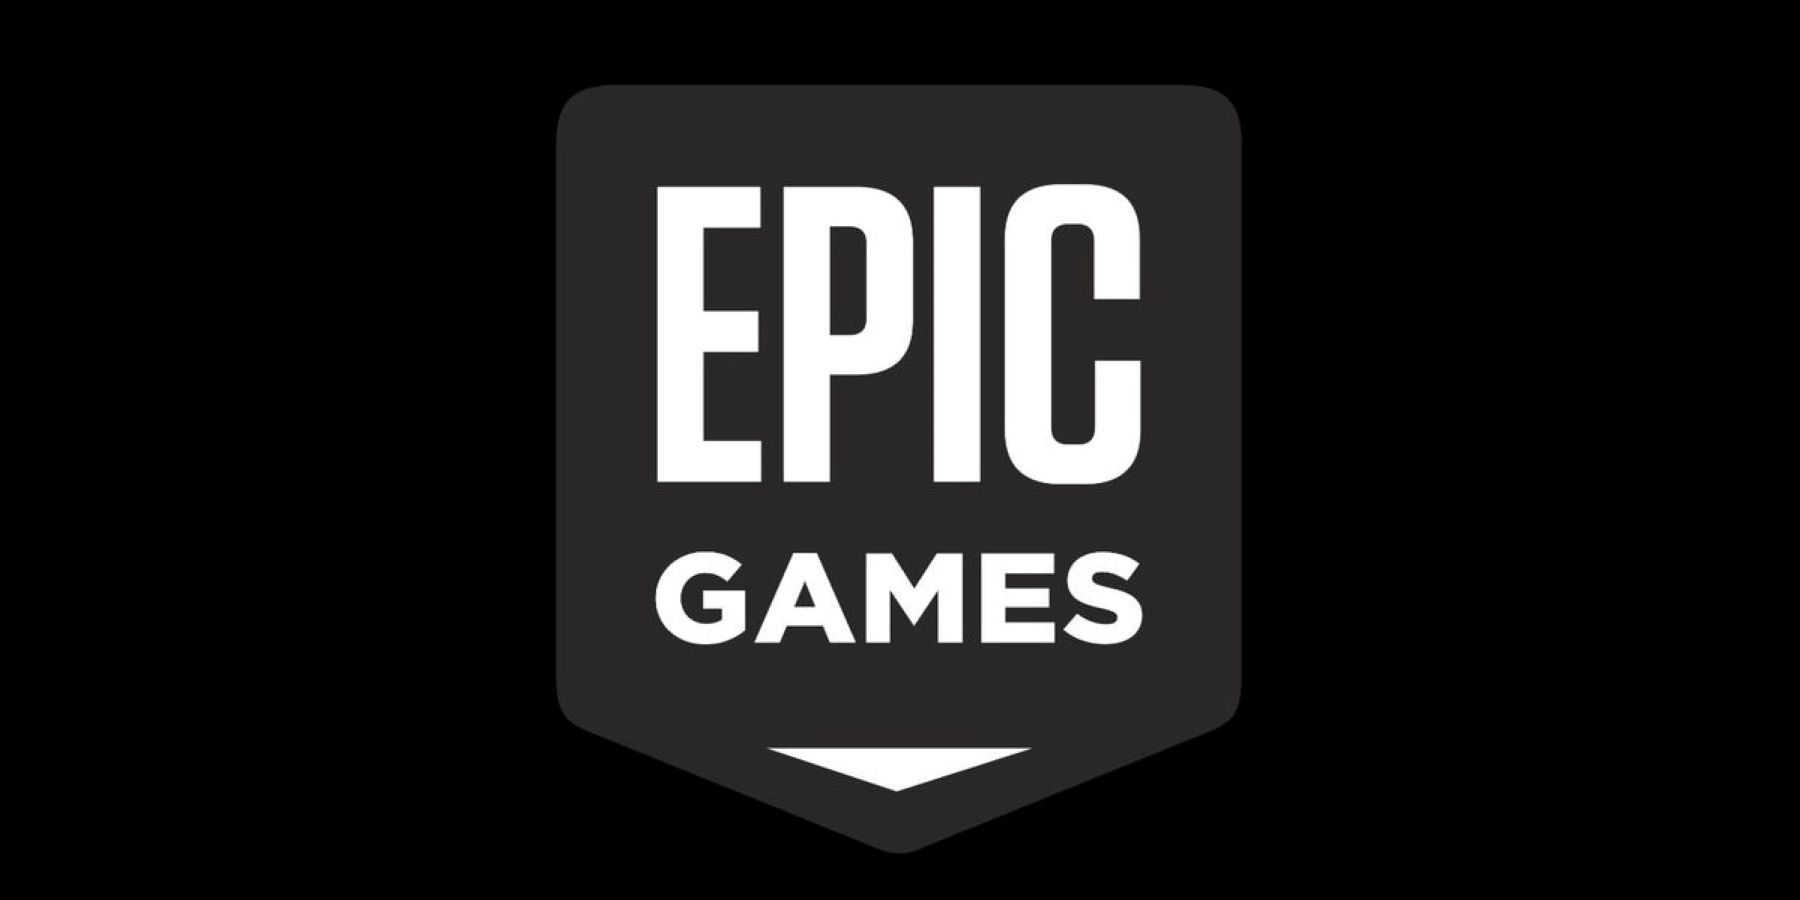 Epic Games logo on a black background